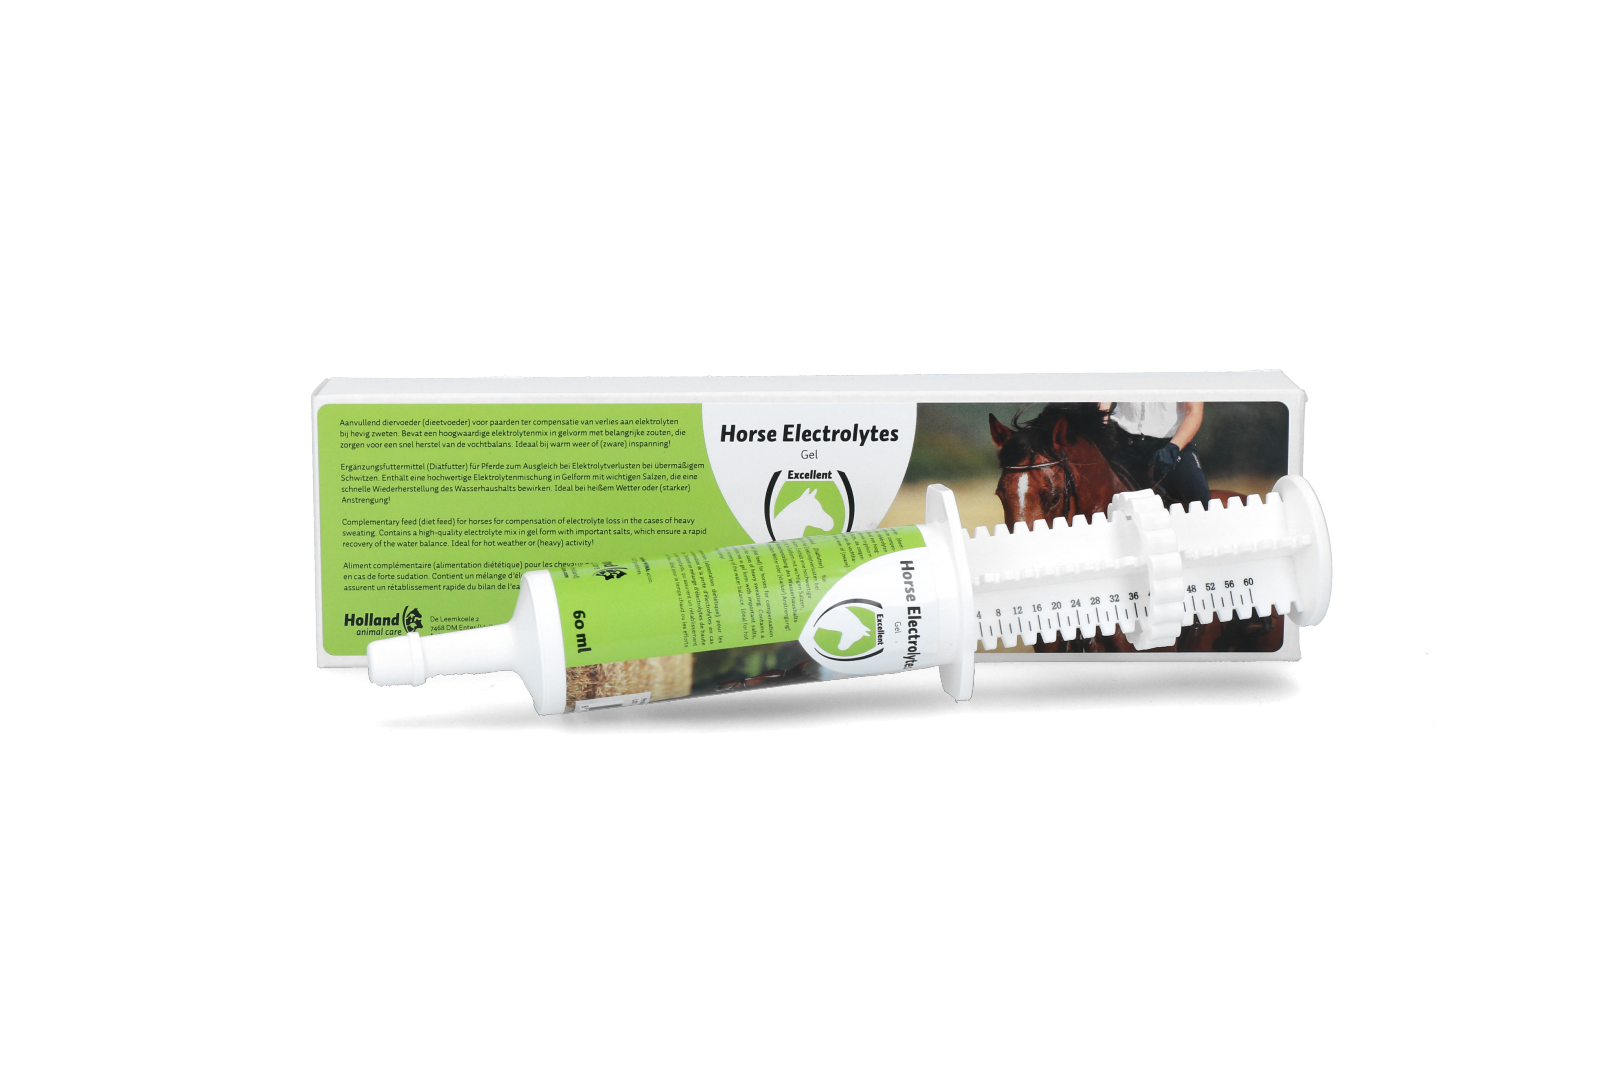 Electrolyte gel injector, horse health